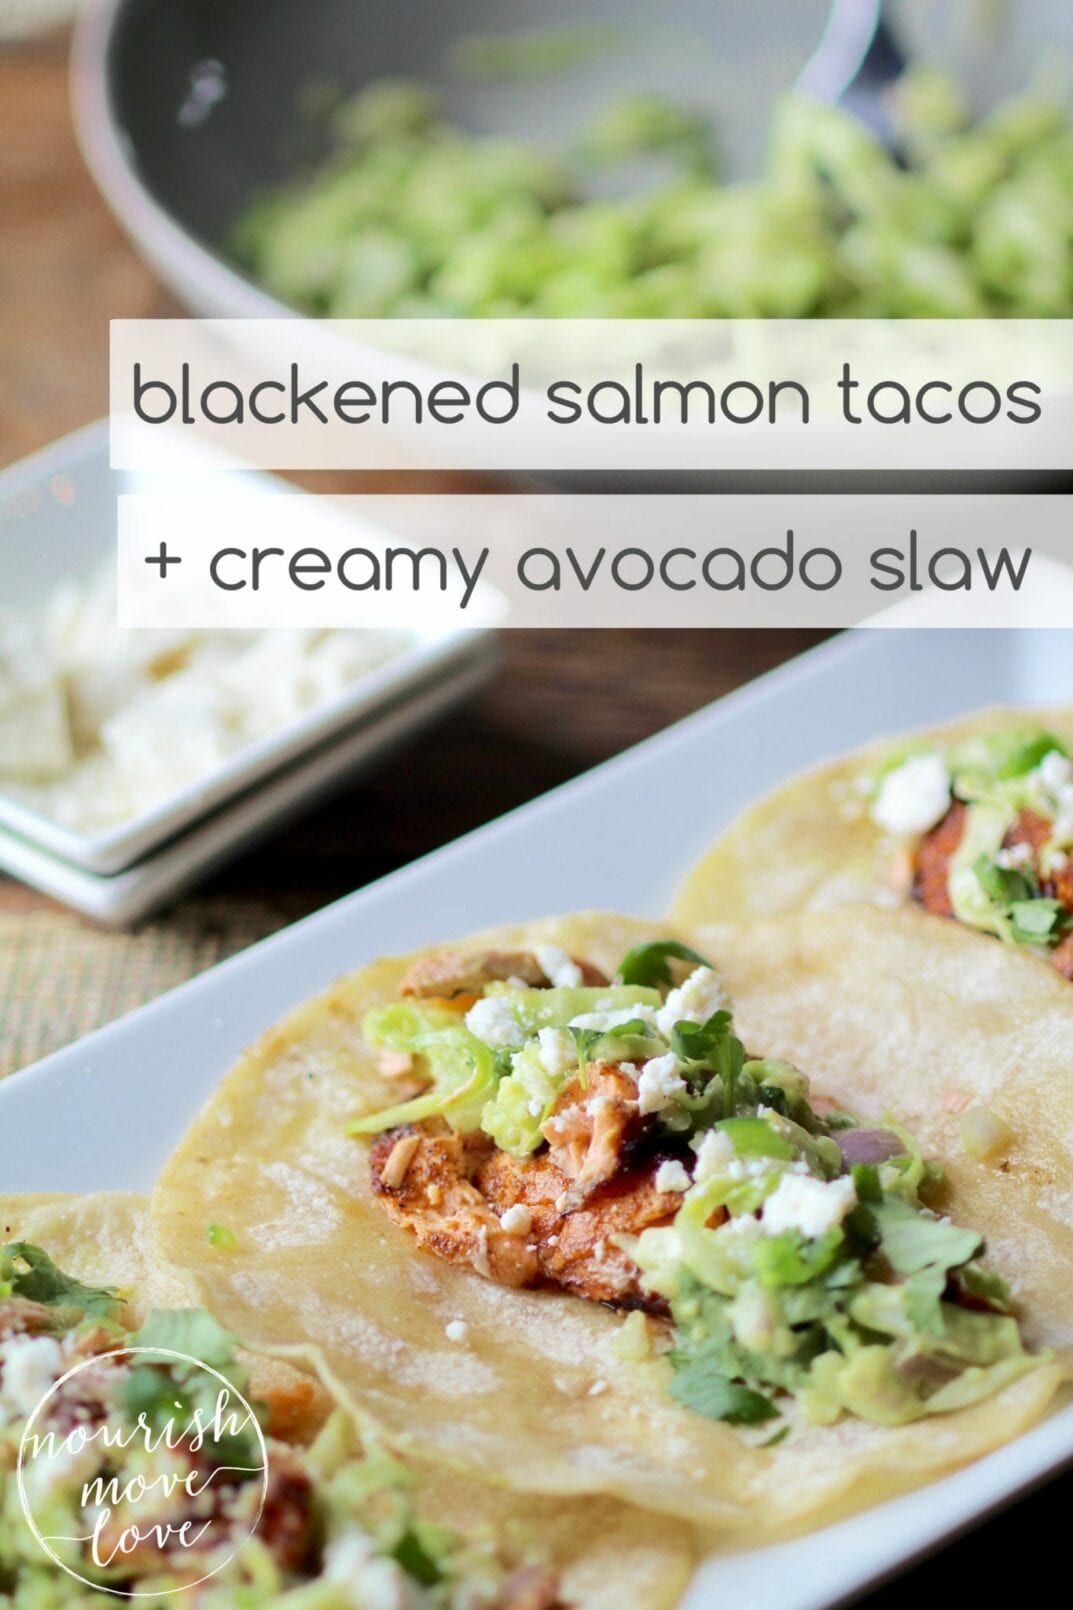 blackened salmon tacos + creamy avocado slaw | seared blackened salmon tacos topped with a creamy avocado slaw, garnished with crumbled cotija cheese and cilantro. | www.nourishmovelove.com